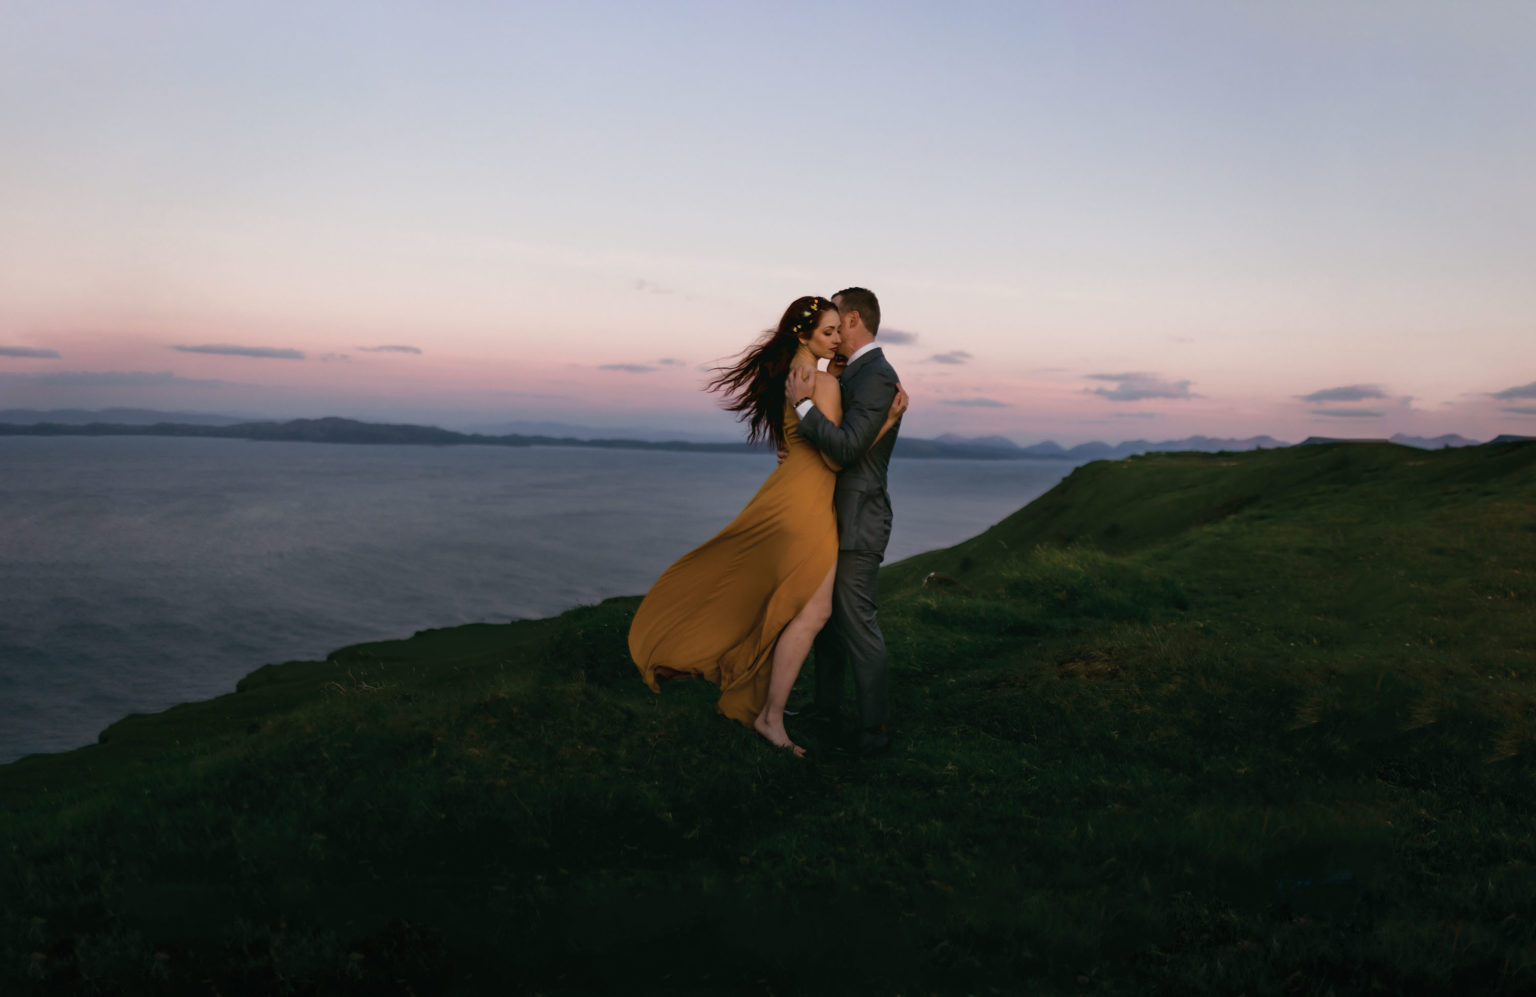 A Scottish Isle Of Skye Wedding 1536x997 